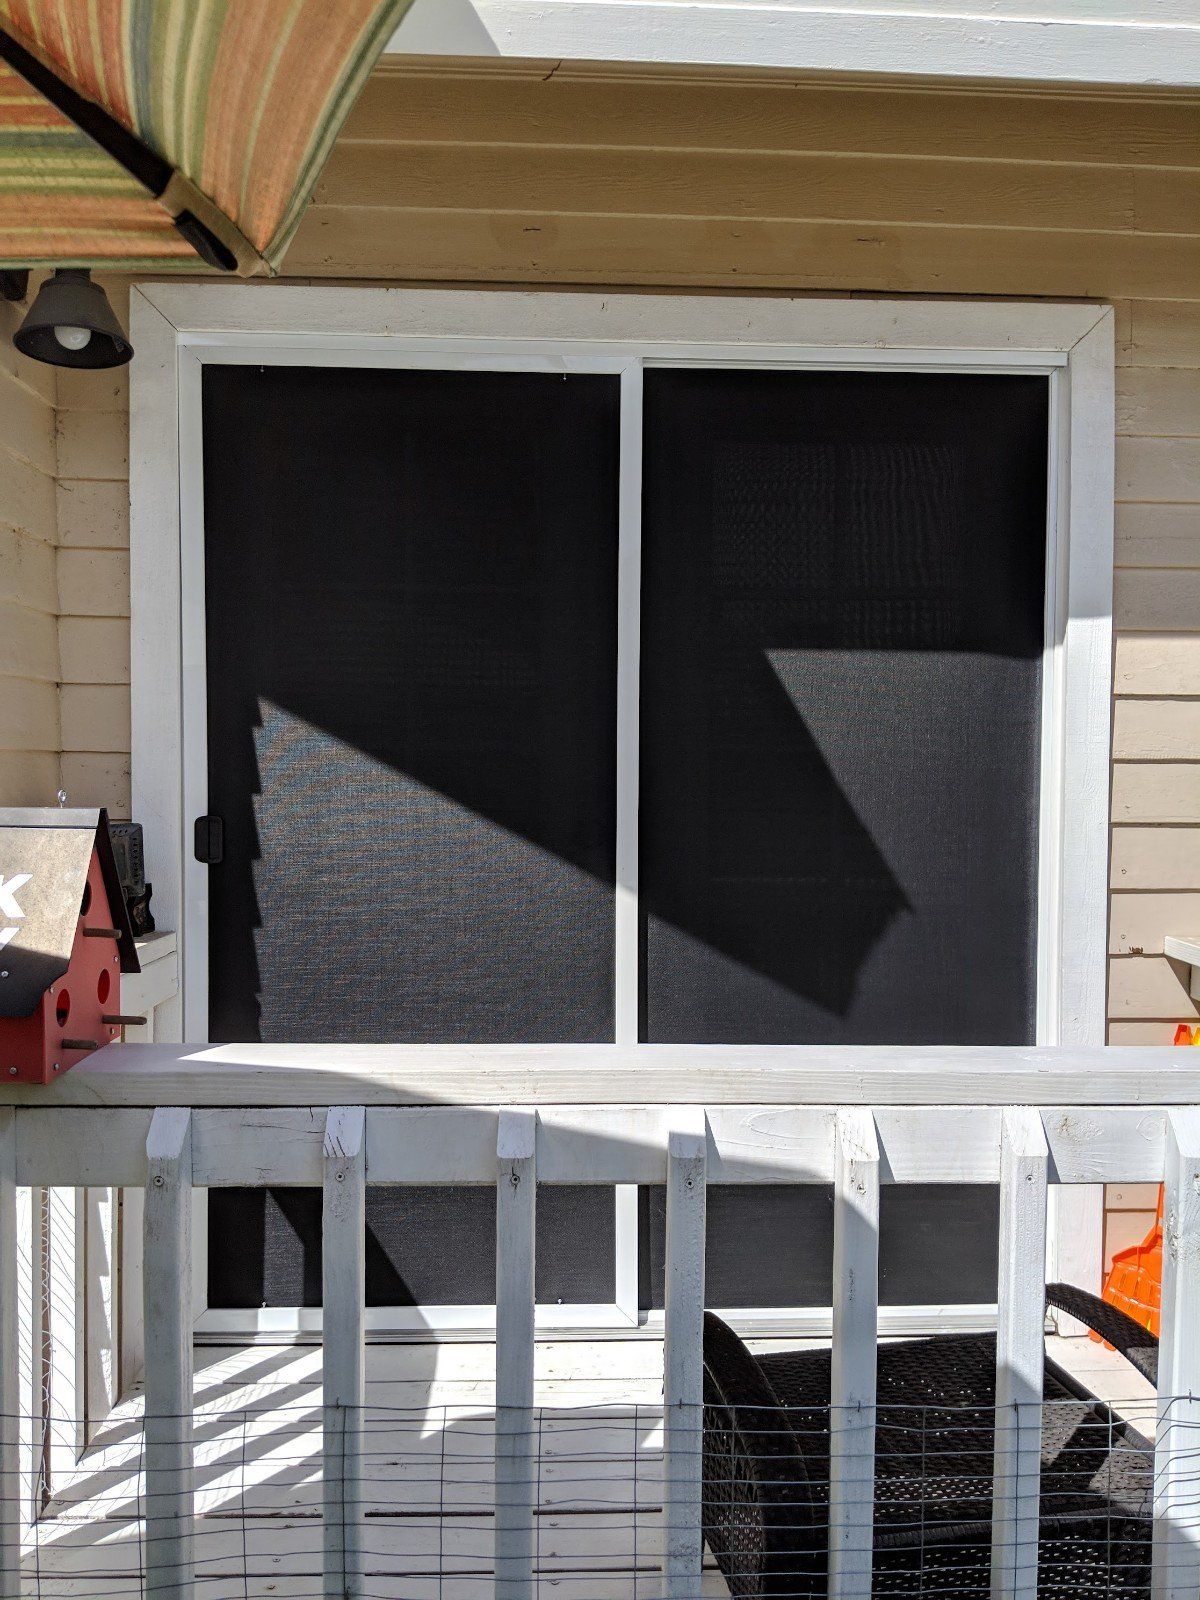 Solar Screens new screens rescreens & repairs